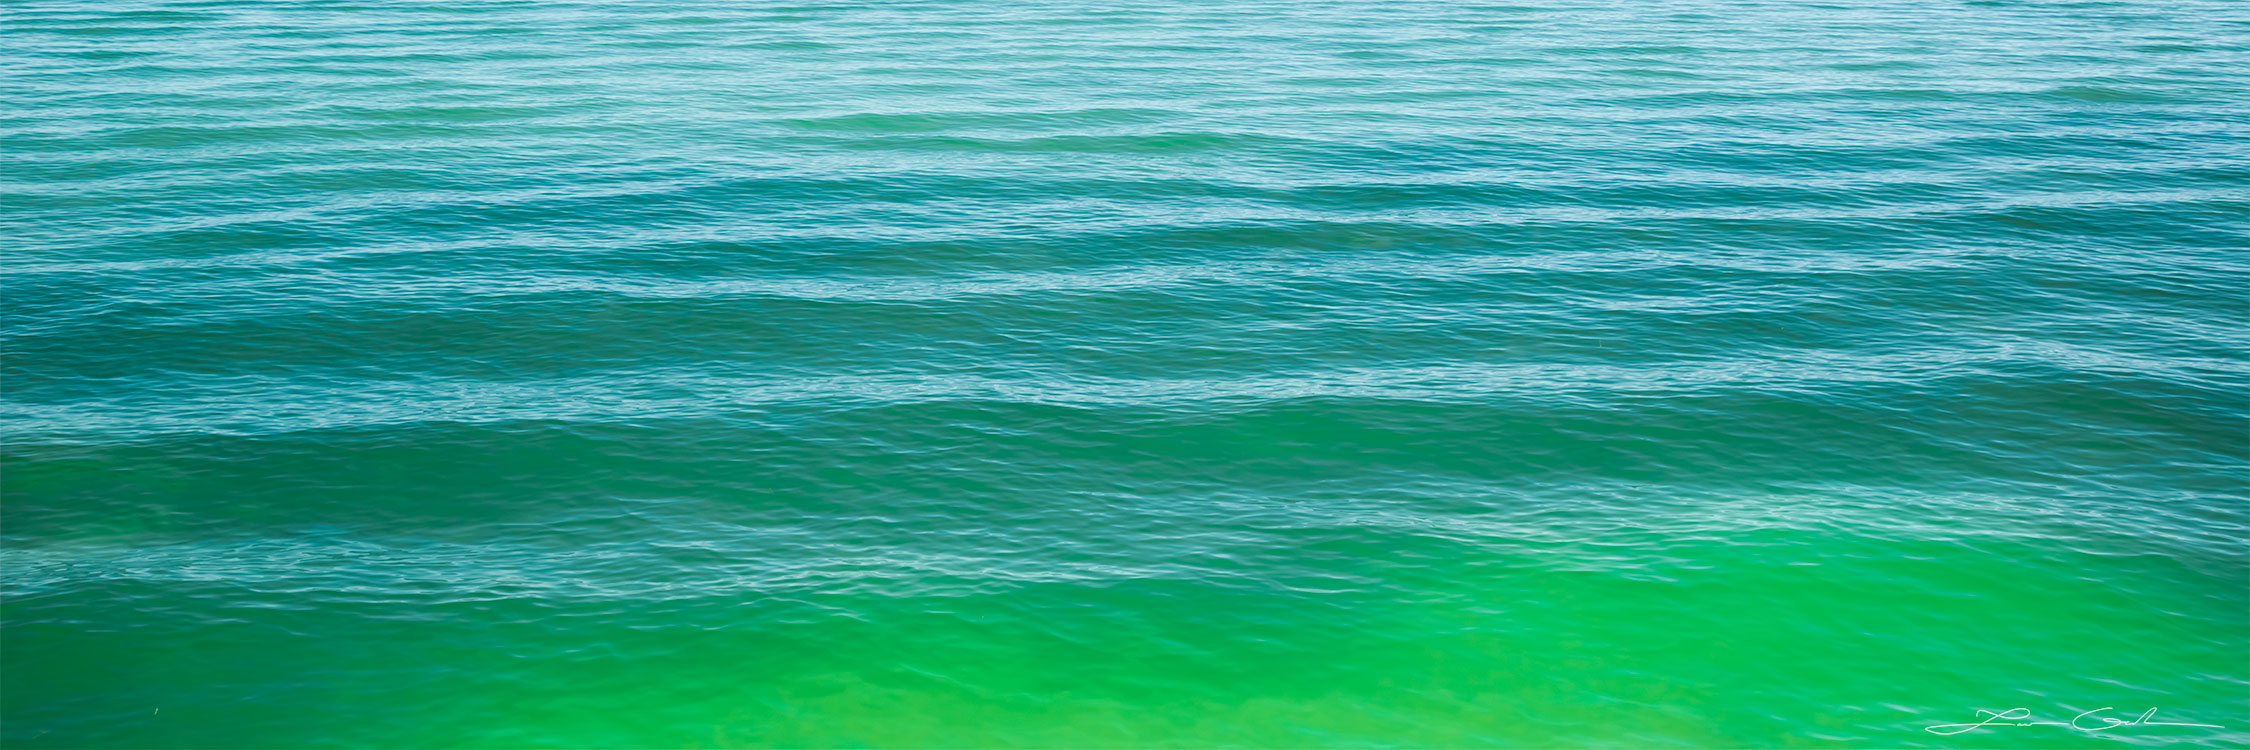 Green ocean water with gentle ripples - Gintchin Fine Art